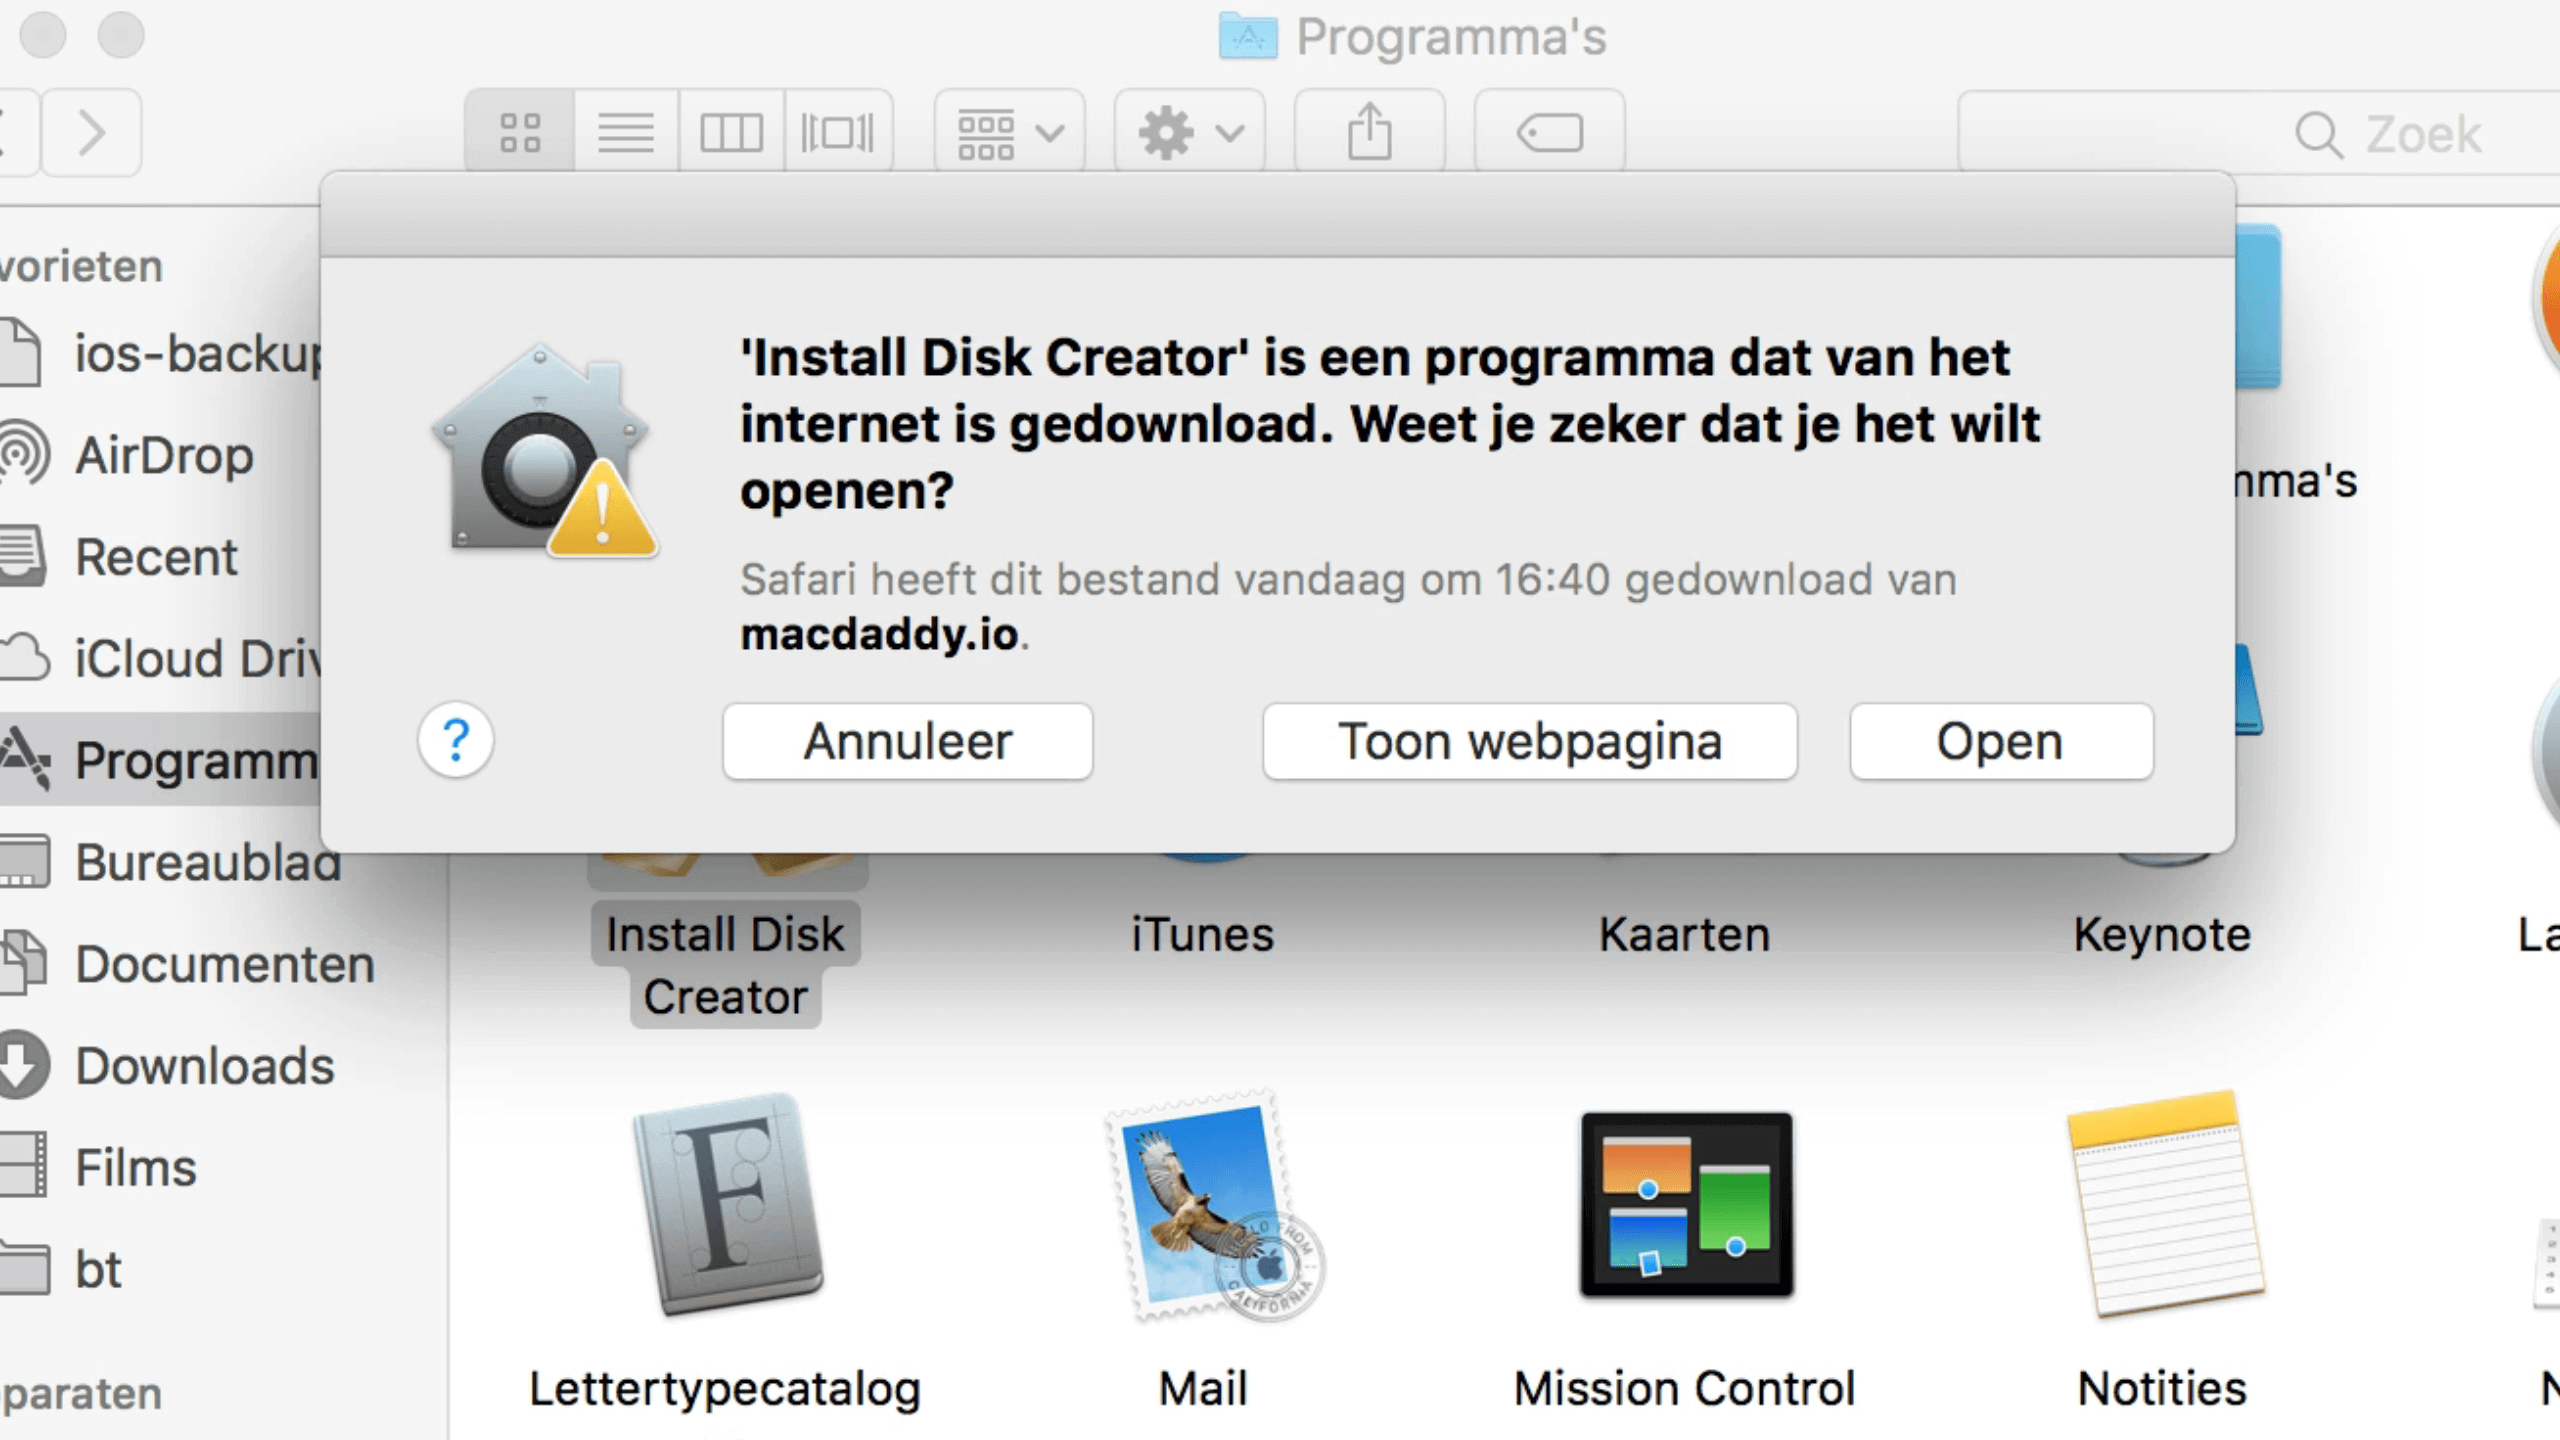 iso to usb mac install disk creator